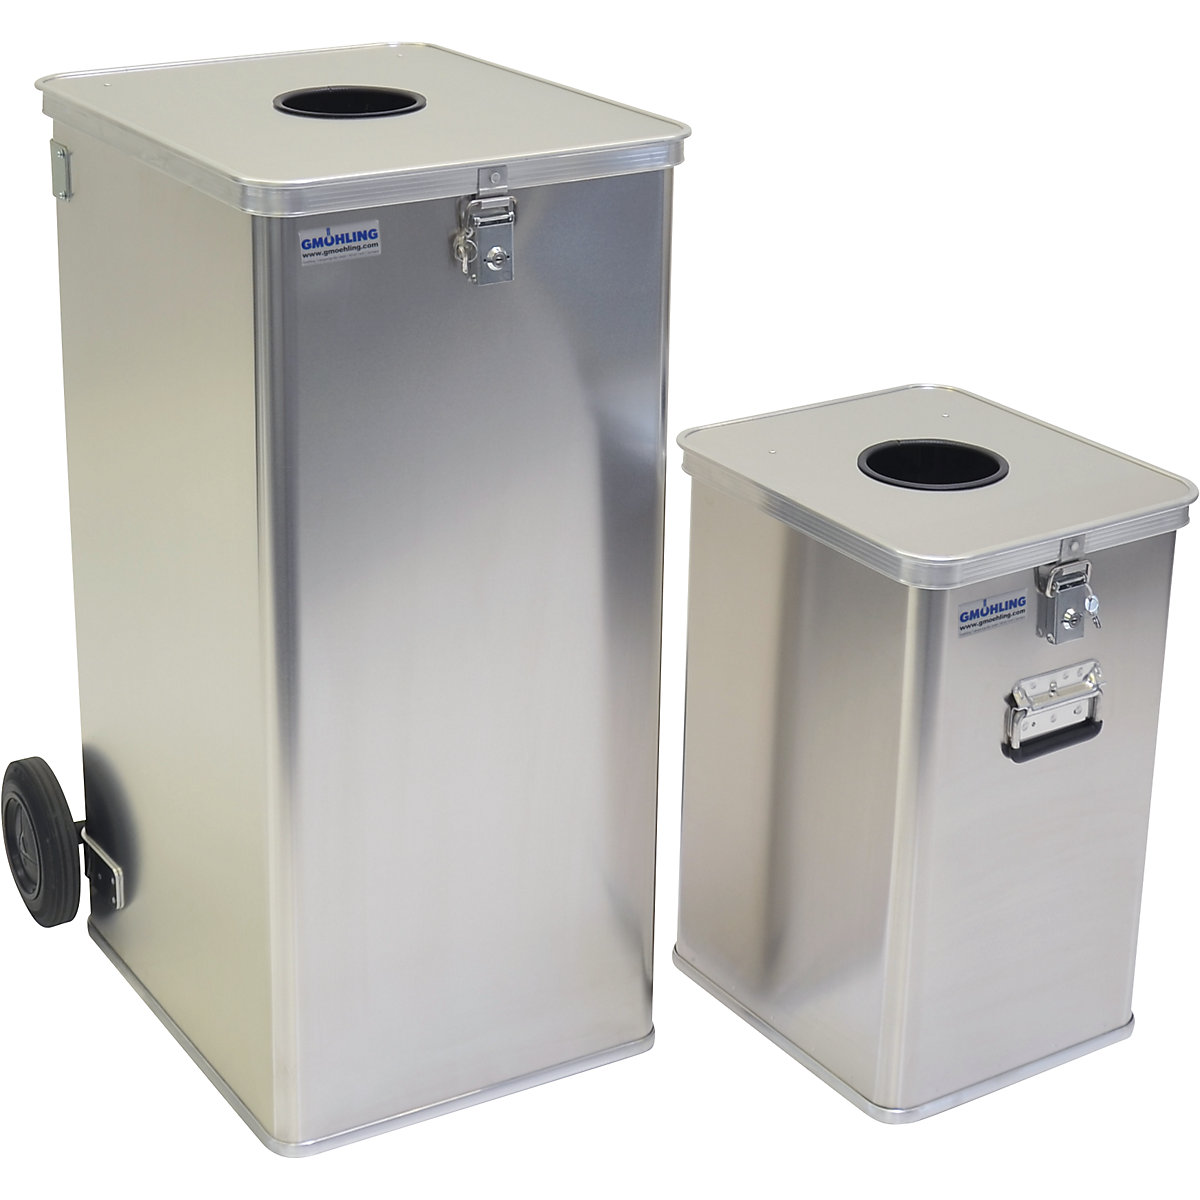 Contentor de lixo/recipiente para resíduos G®-DROP – Gmöhling (Imagem do produto 7)-6